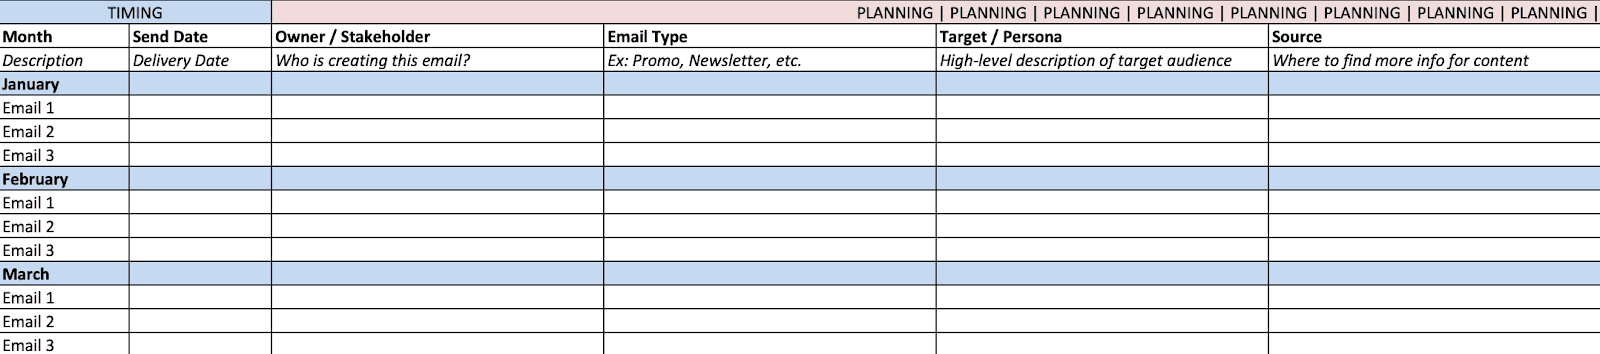 Email marketing calendar template